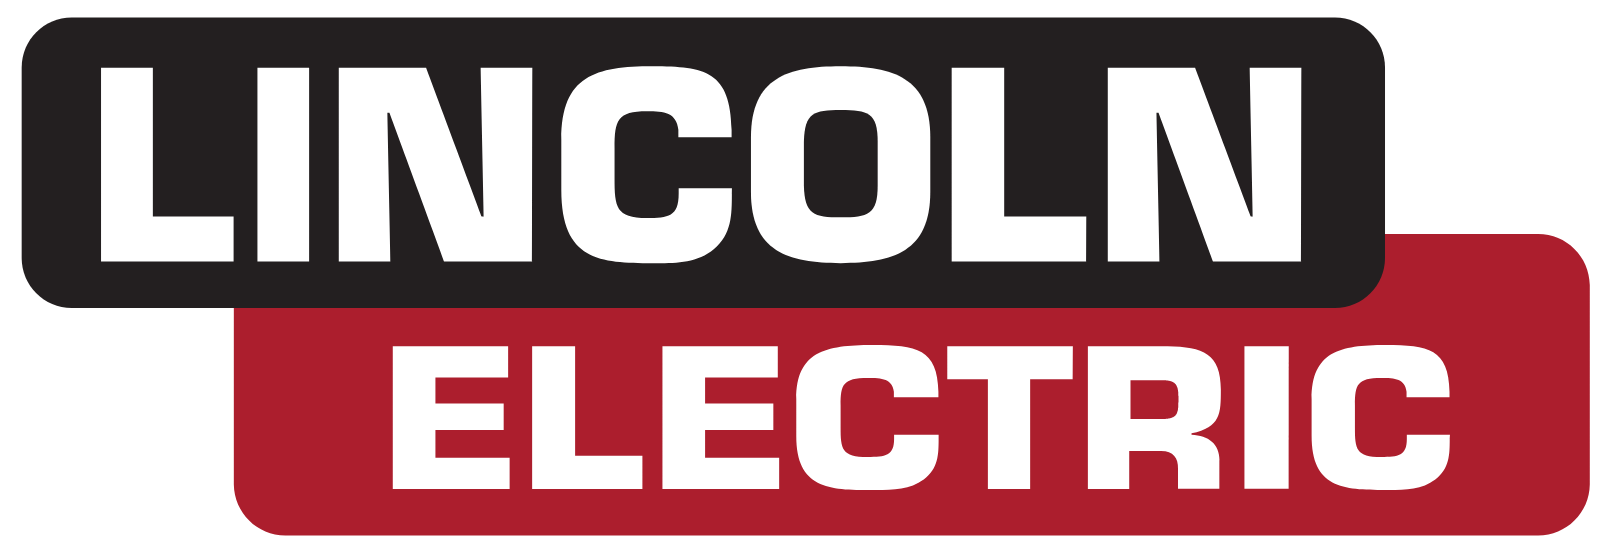 Lincoln Electric
 logo pour fonds sombres (PNG transparent)